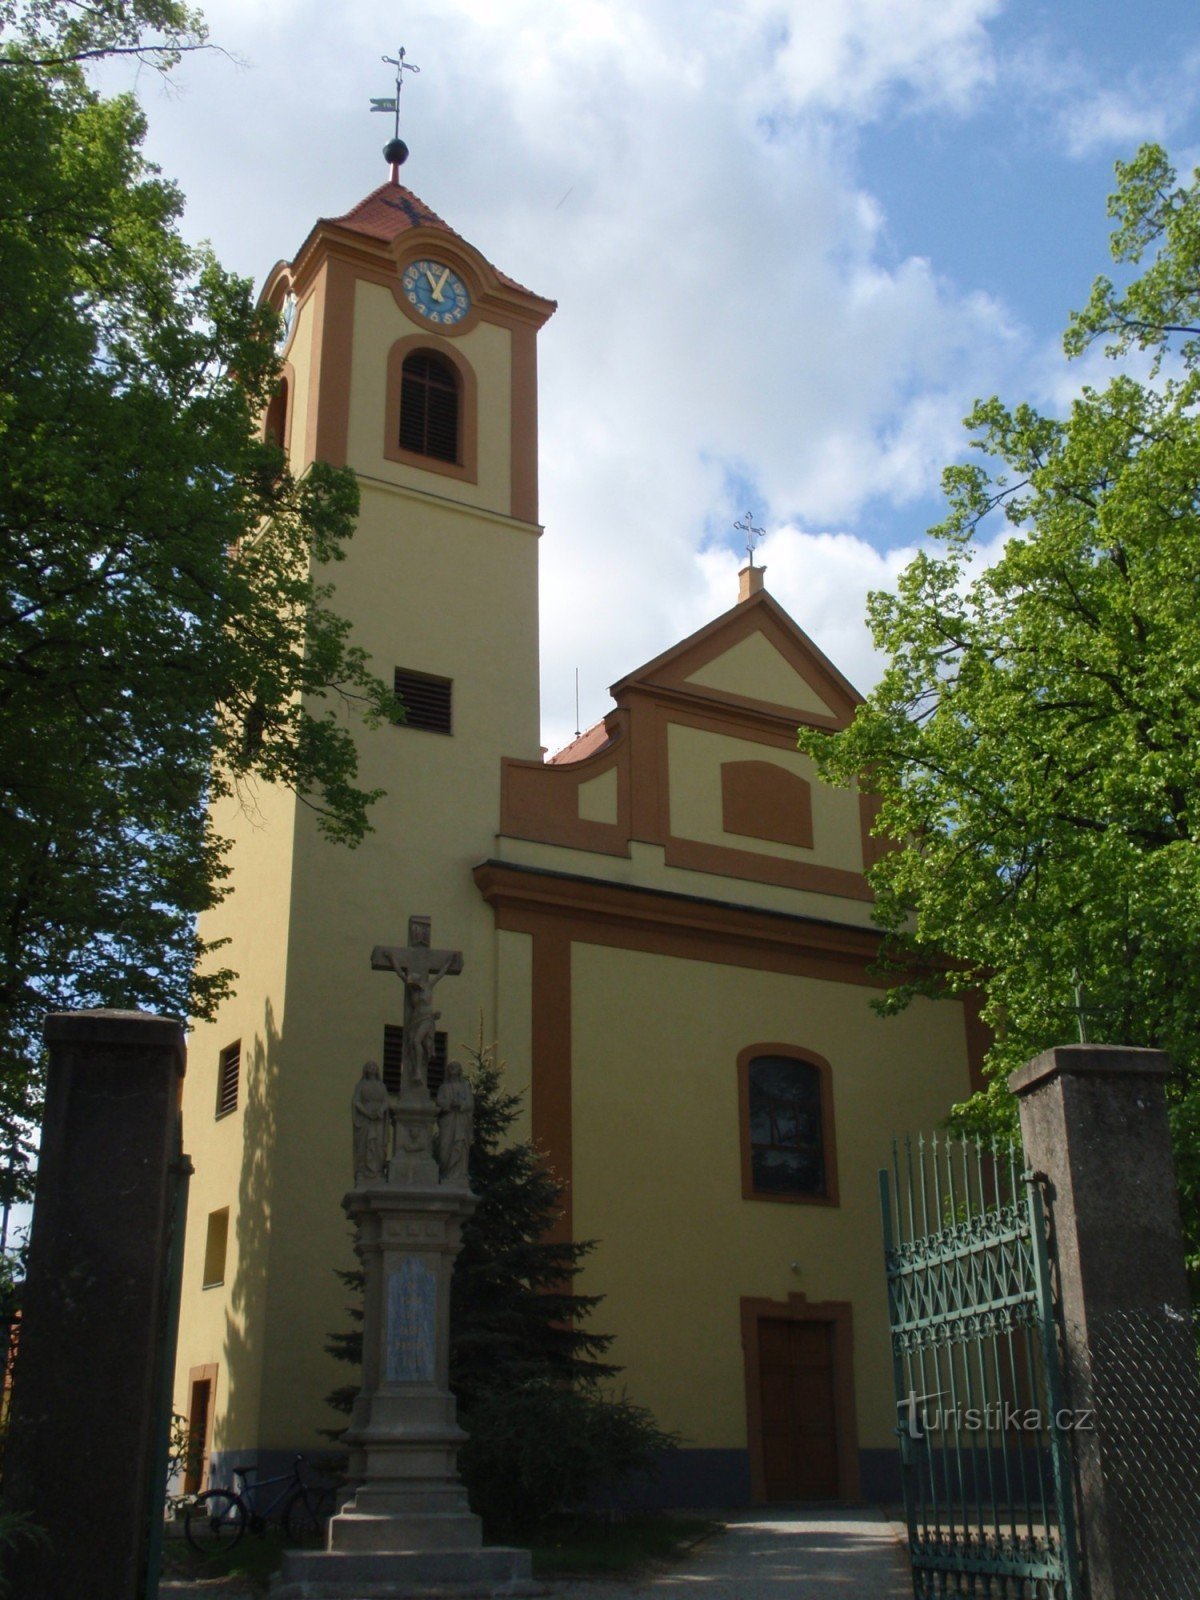 Moravská Nová Ves - kerk en beelden